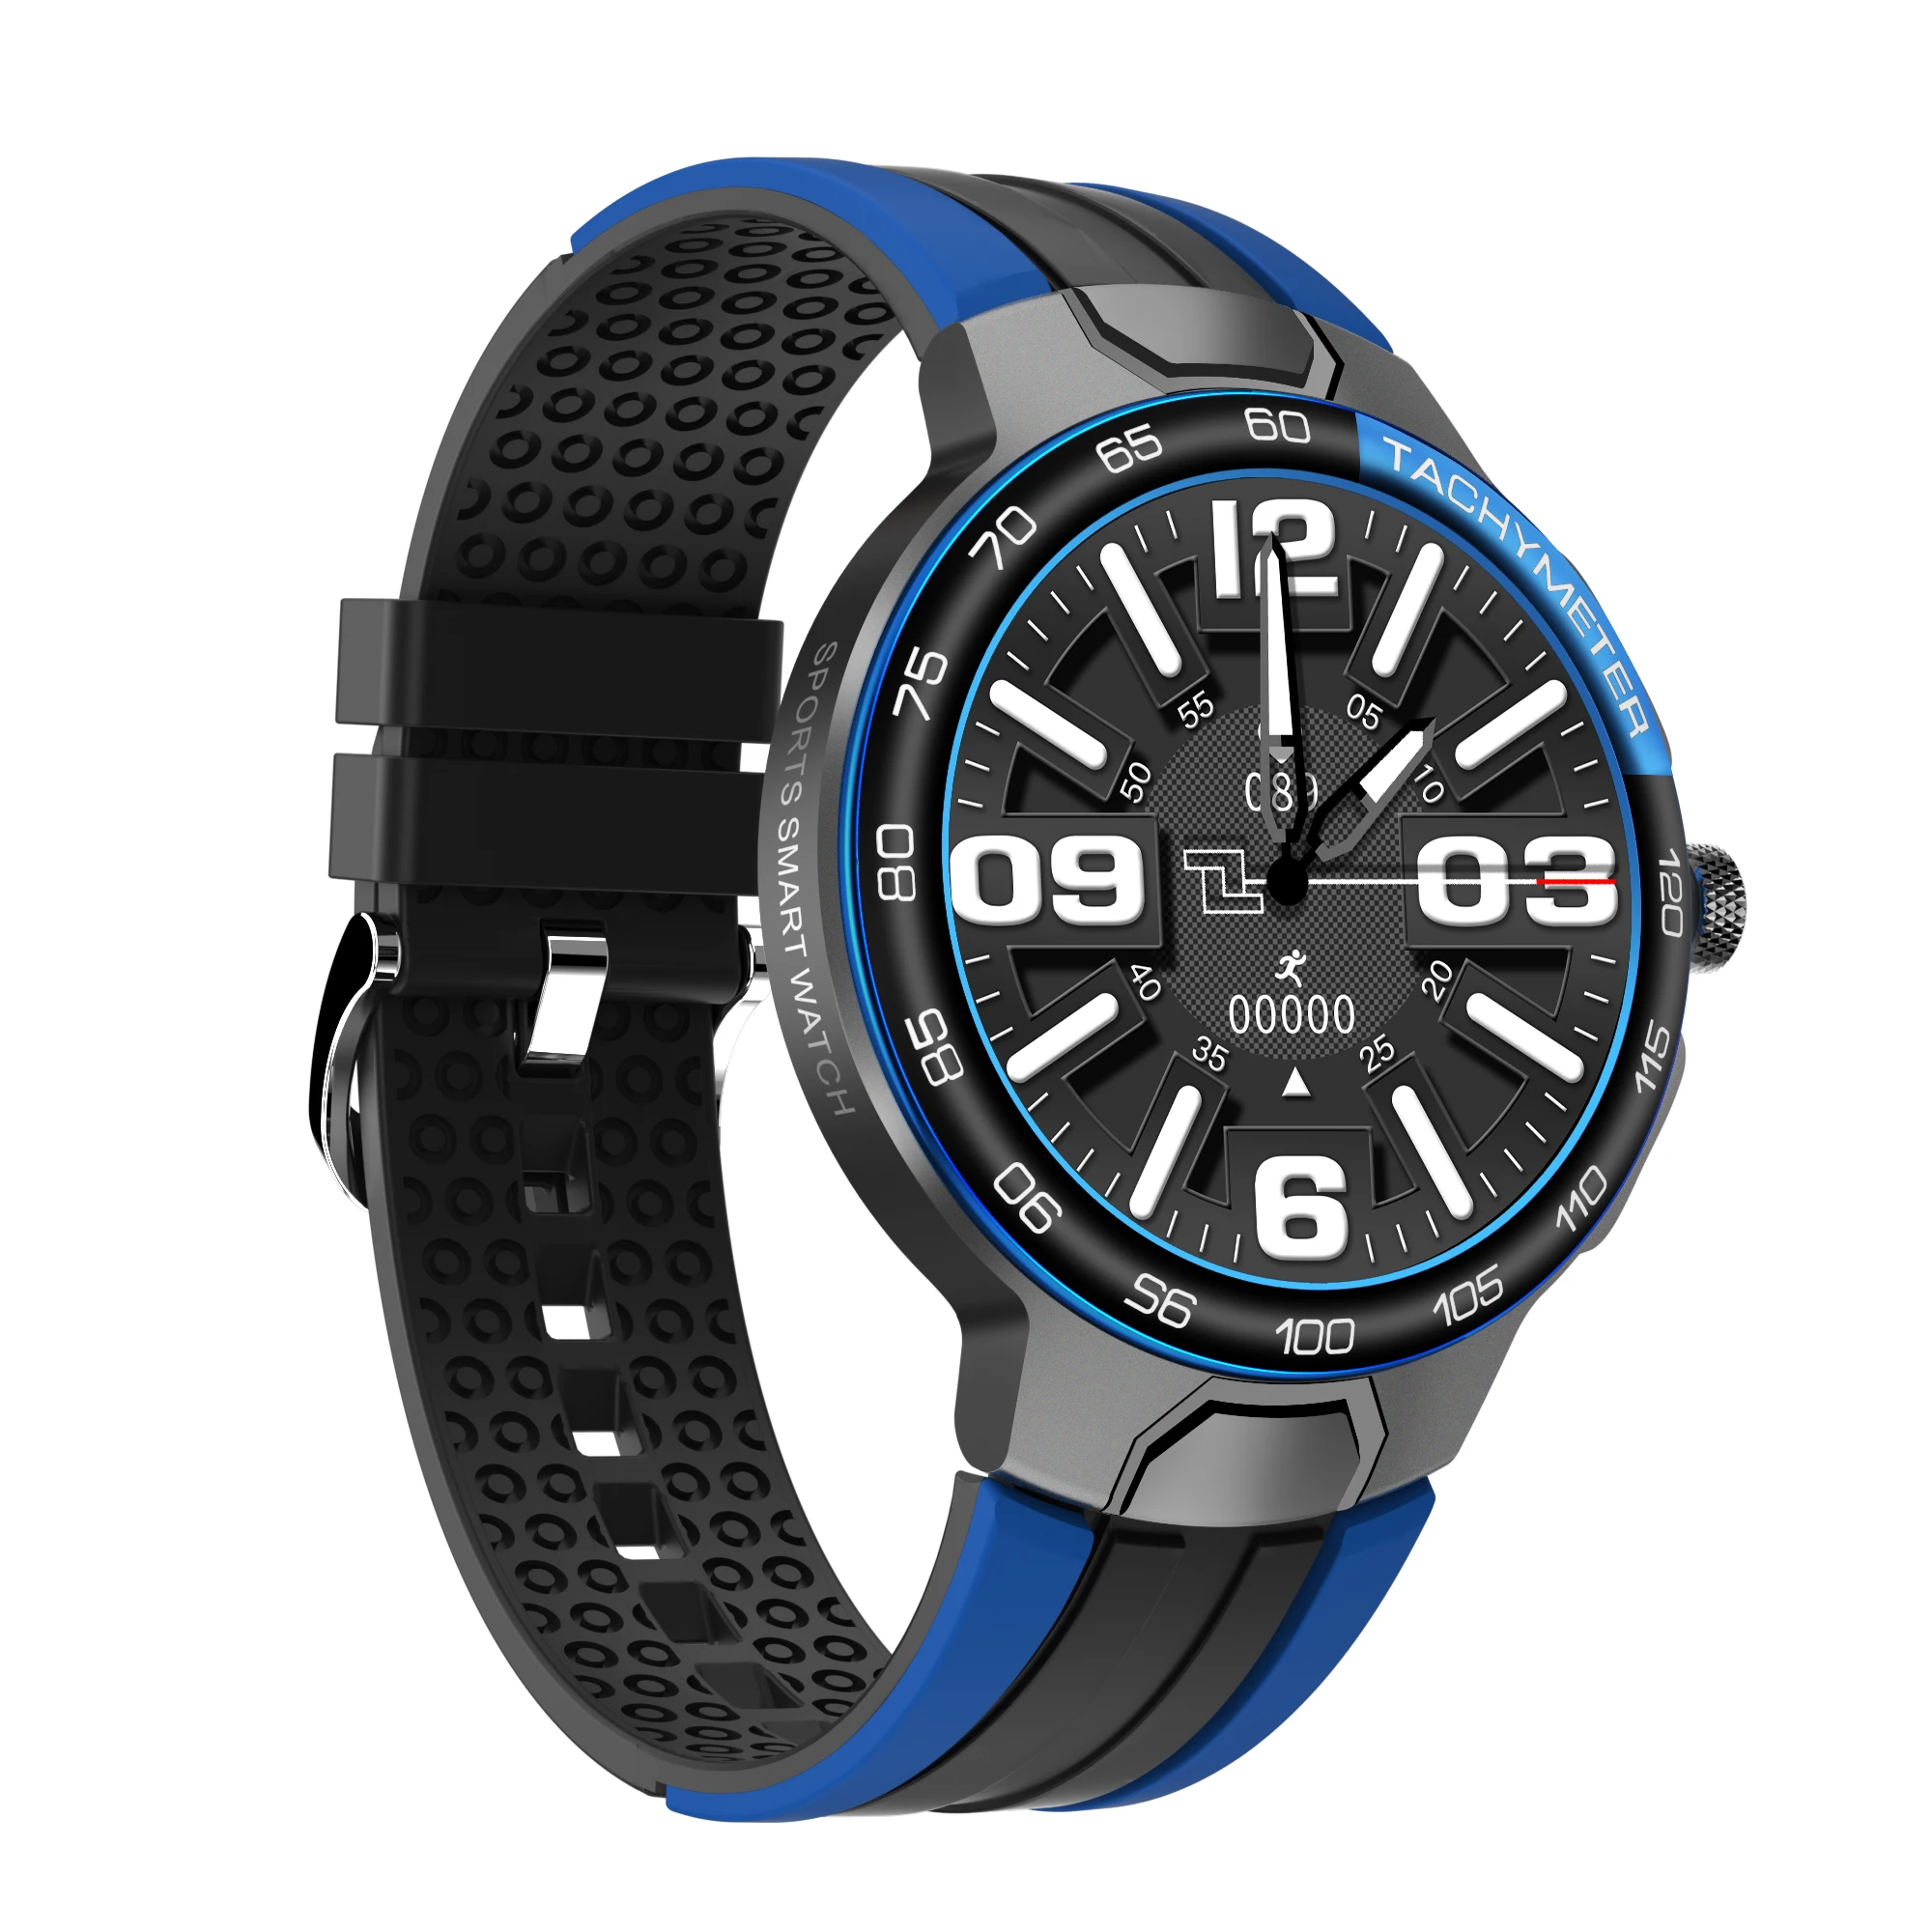 

E15 1.28 Inch Round Color Screen Smart Watch IP68 Waterproof Support Sleep Monitoring Blood Pressure Blood Oxygen Sport Watch